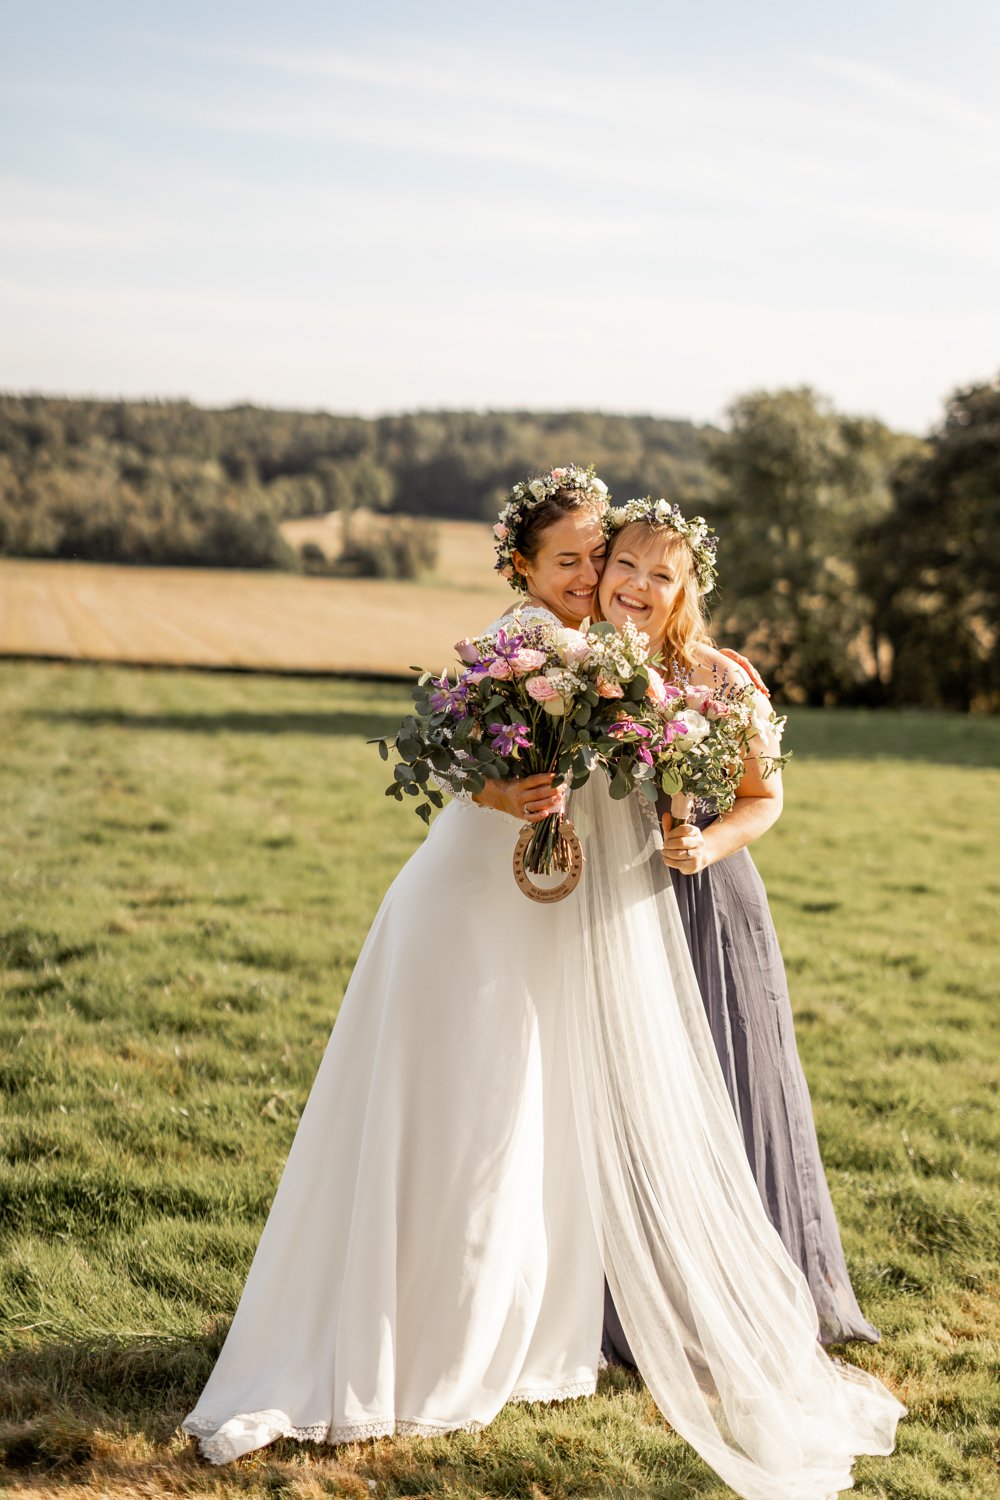 Lottie Topping-natura wedding photography- garden wedding-uk summer wedding-72.jpg